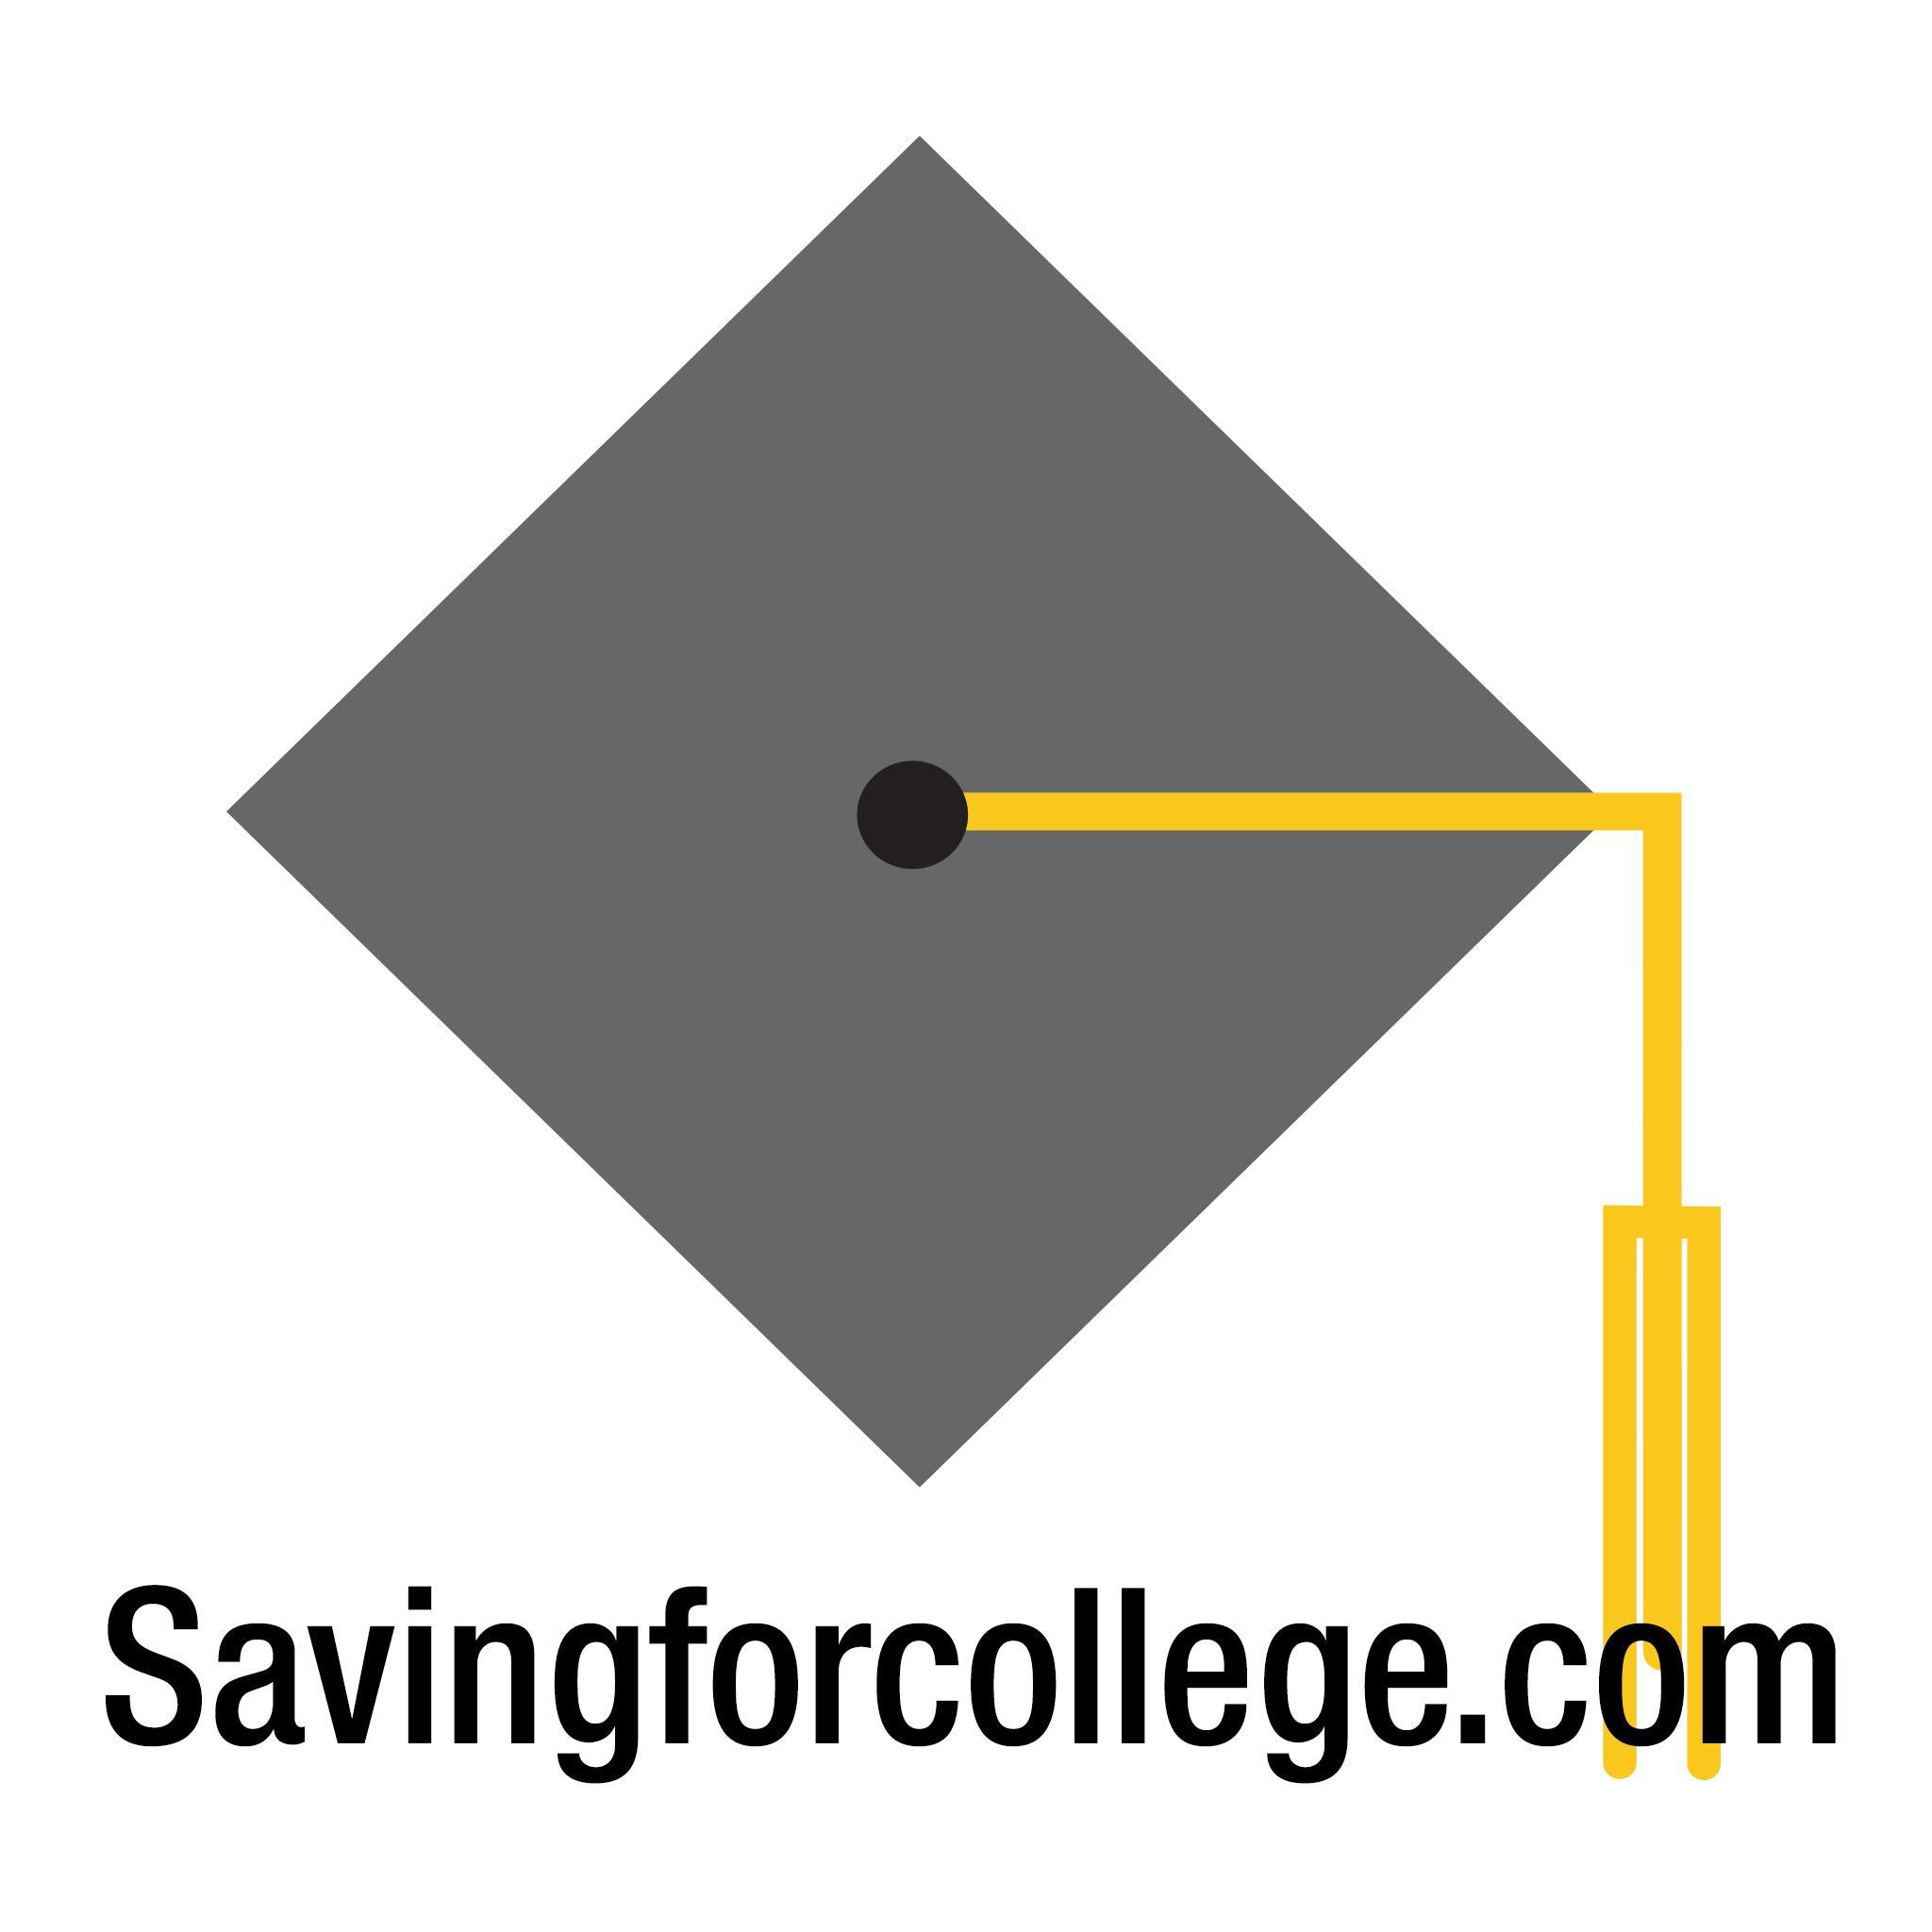 Savingforcollege logo